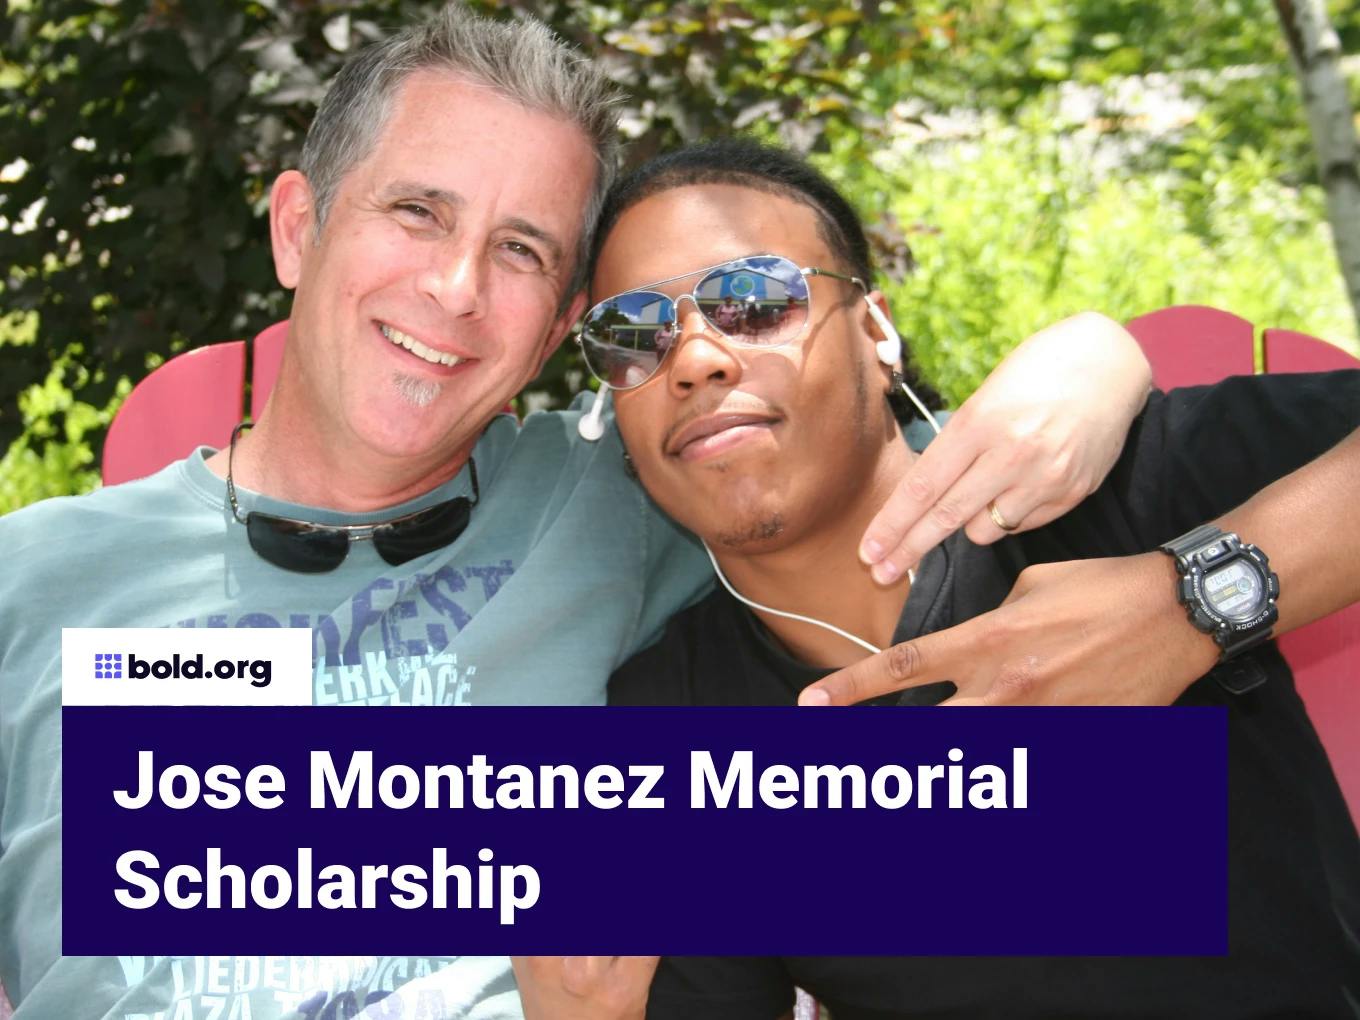 Jose Montanez Memorial Scholarship